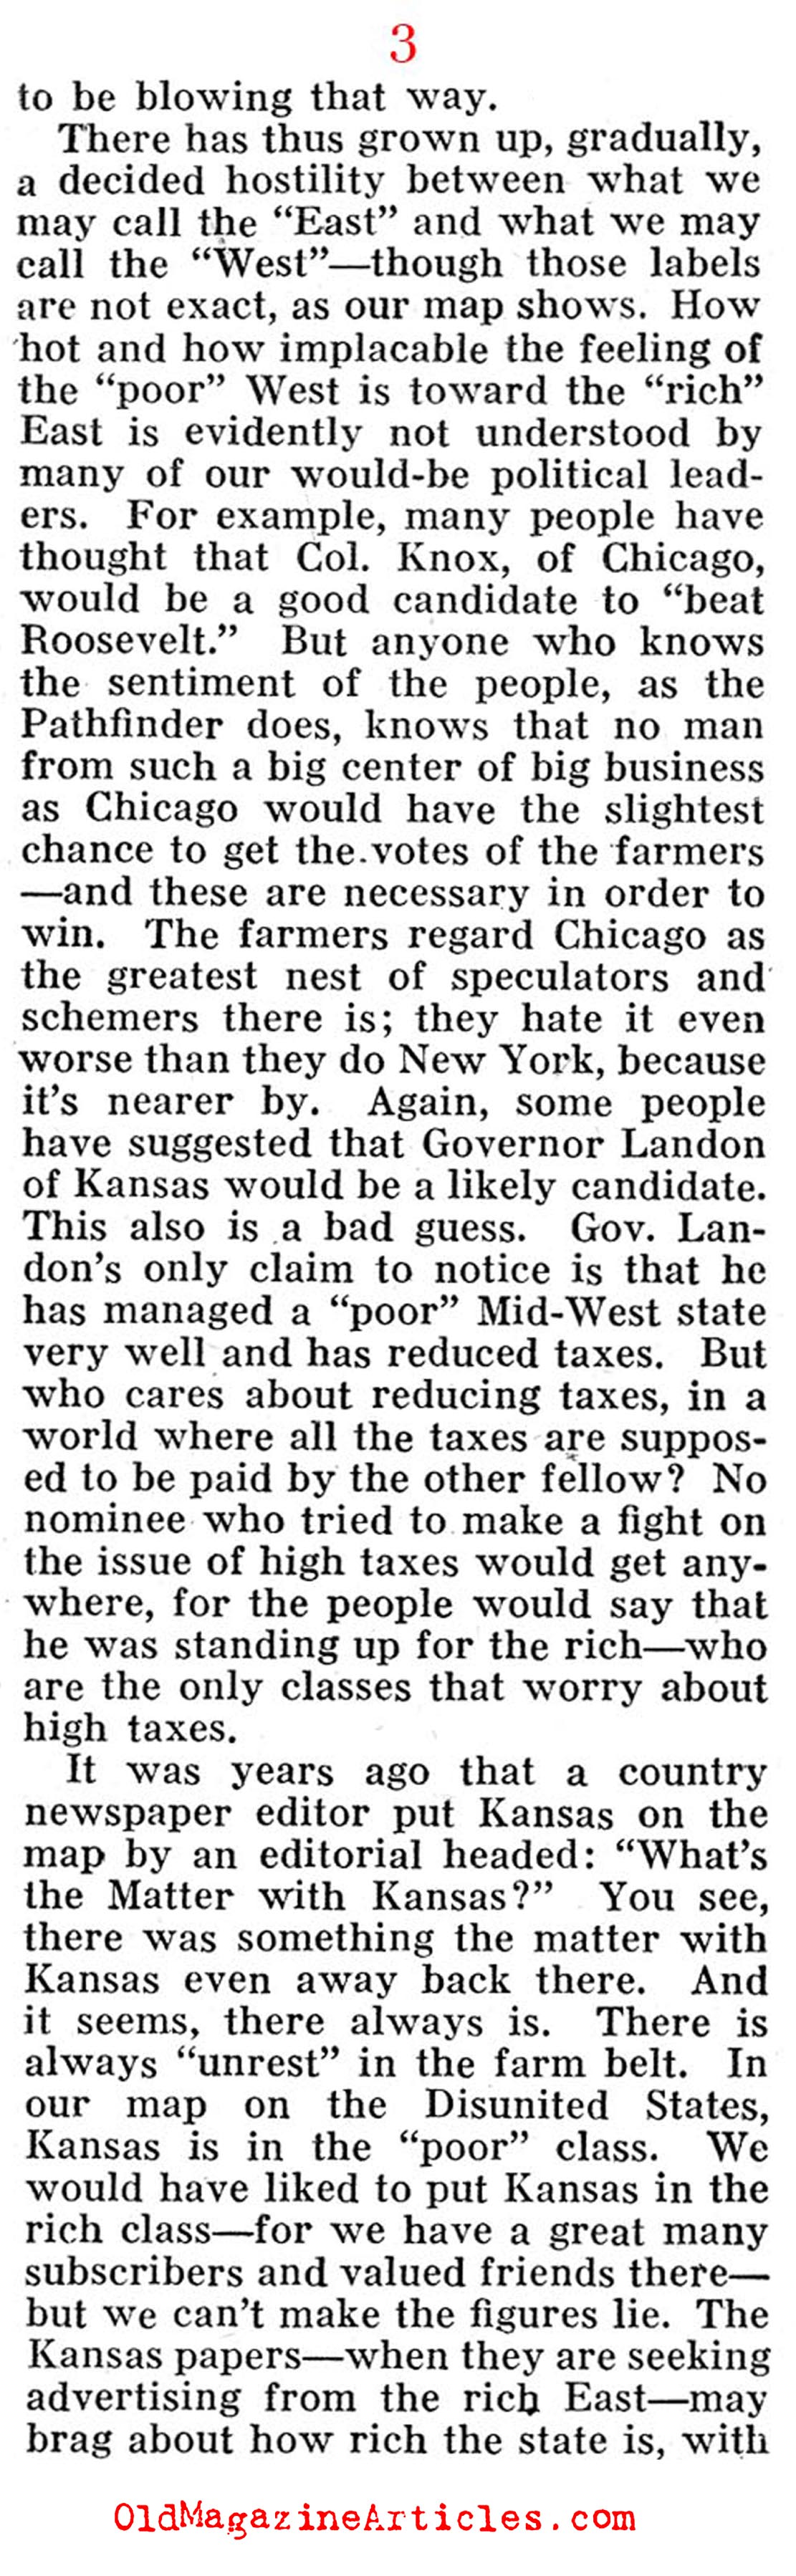 Soak the Rich States, Too (Pathfinder Magazine, 1935)